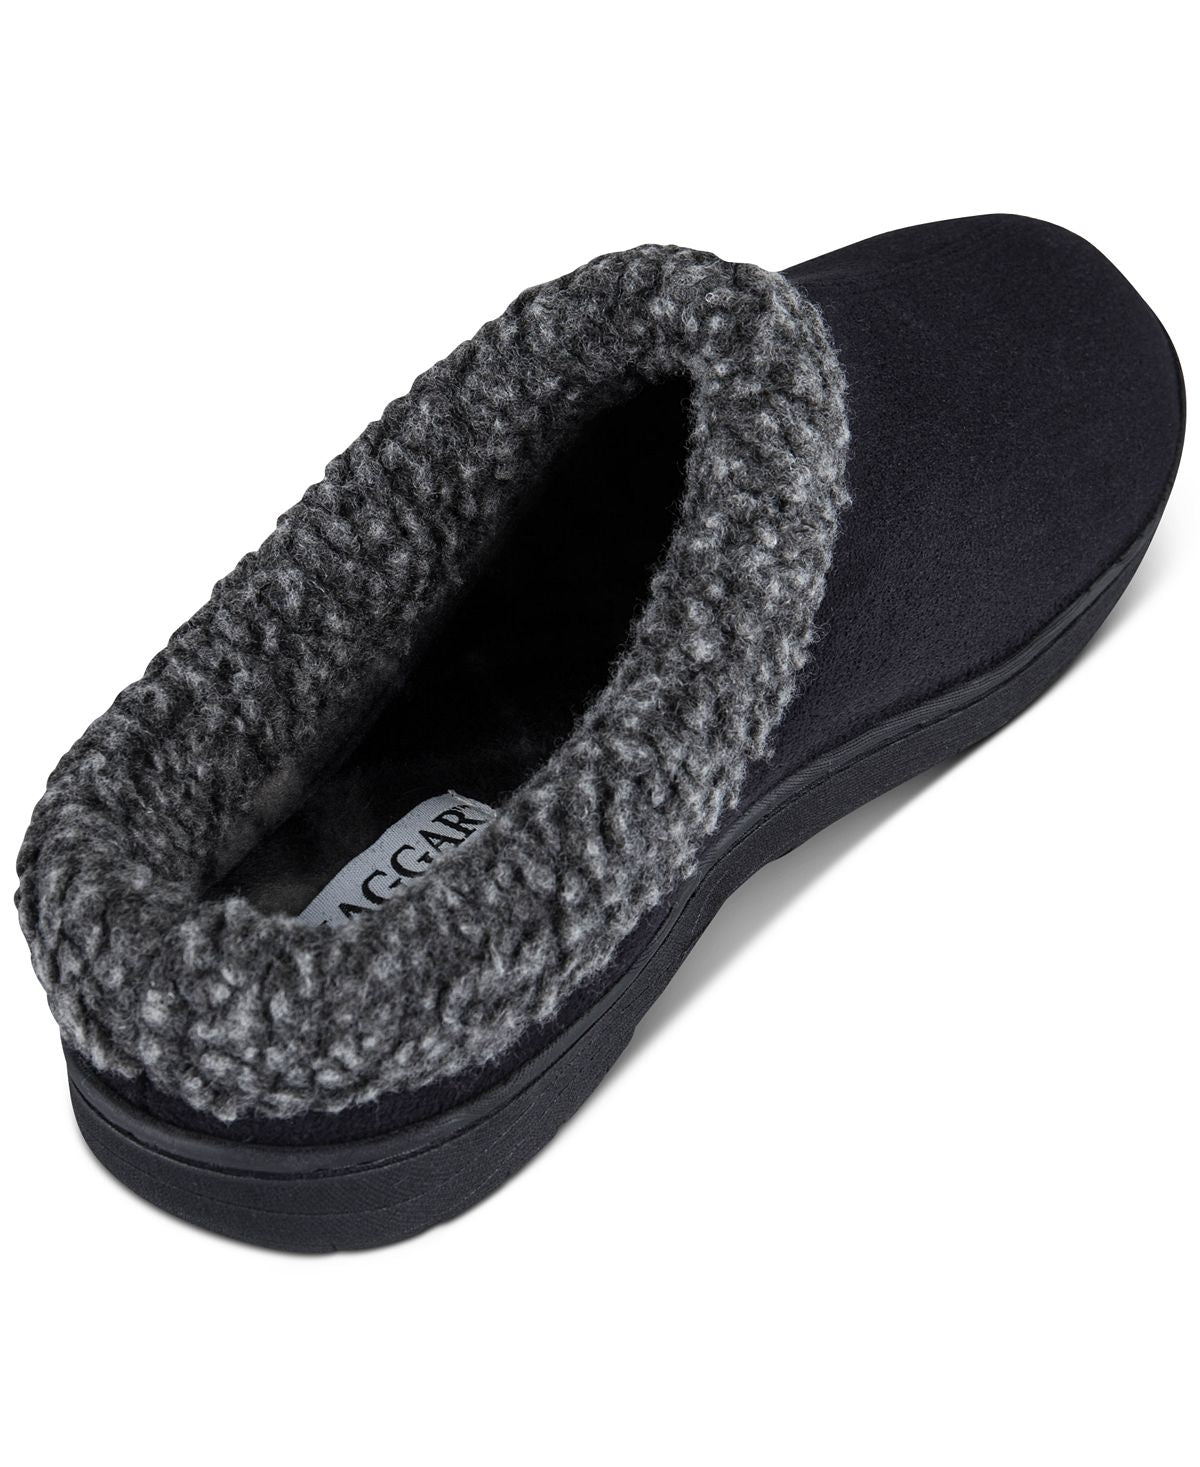 Haggar Faux-suede Clog Slippers With Fleece Collar Black